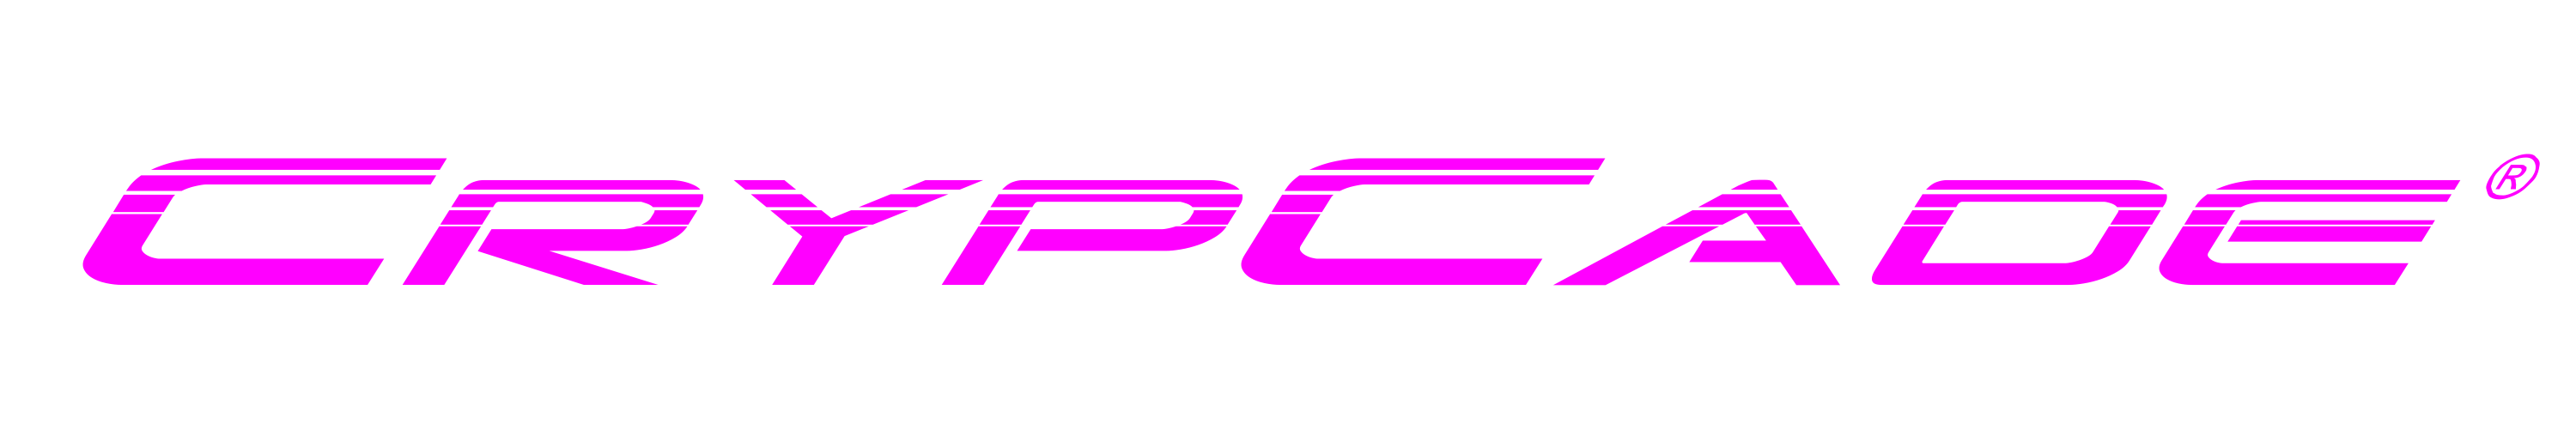 crypcade logo fuchsia